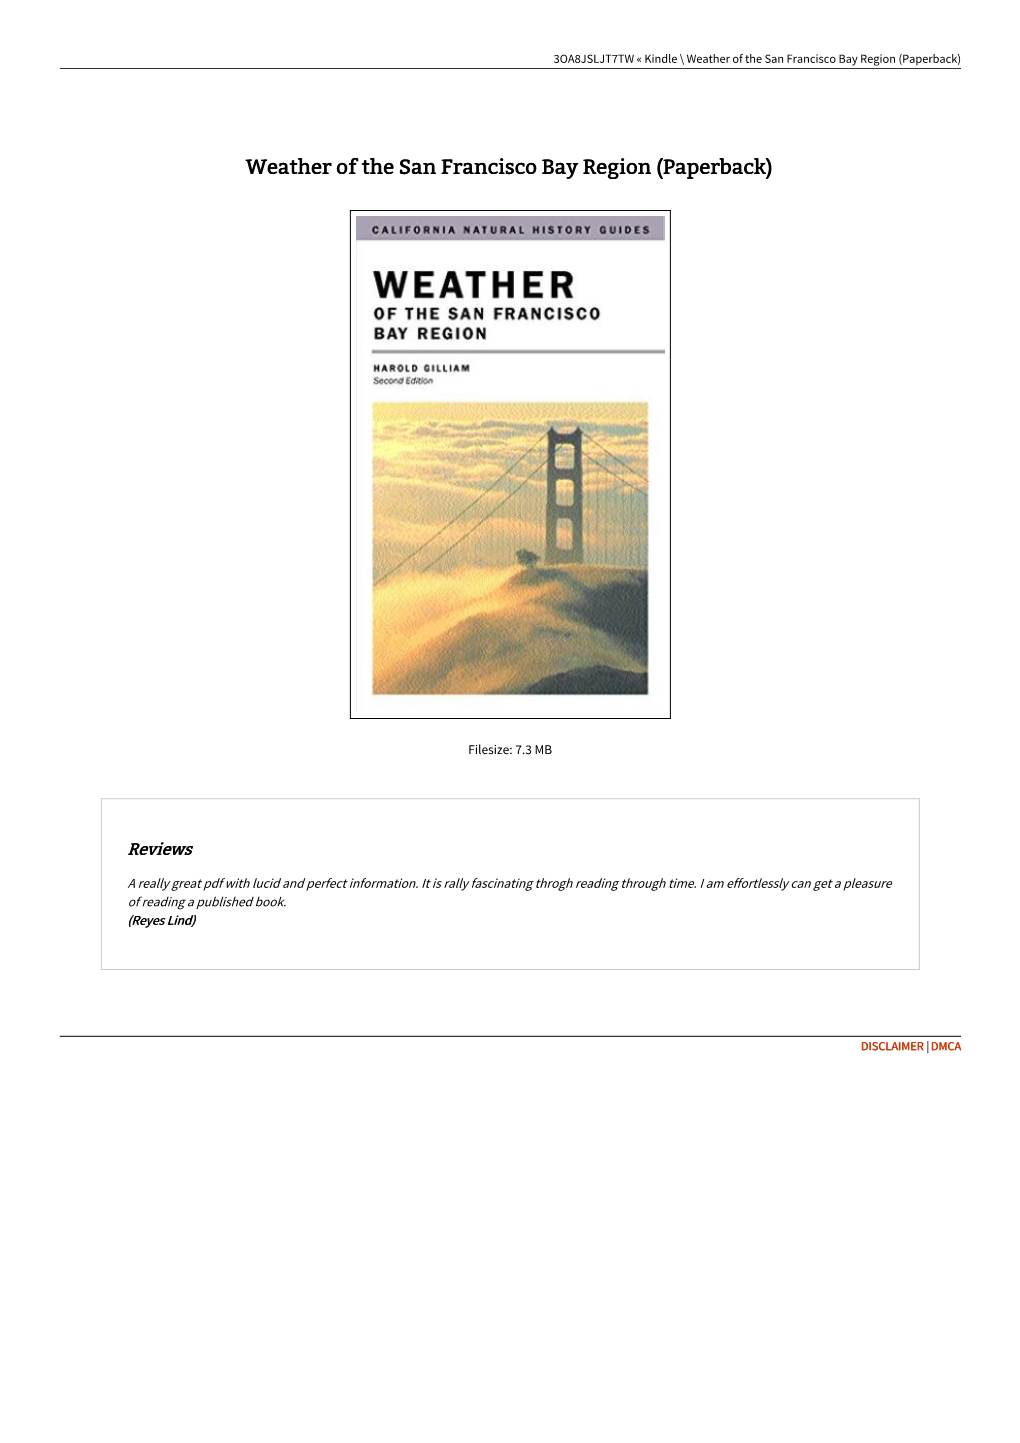 Download Ebook « Weather of the San Francisco Bay Region